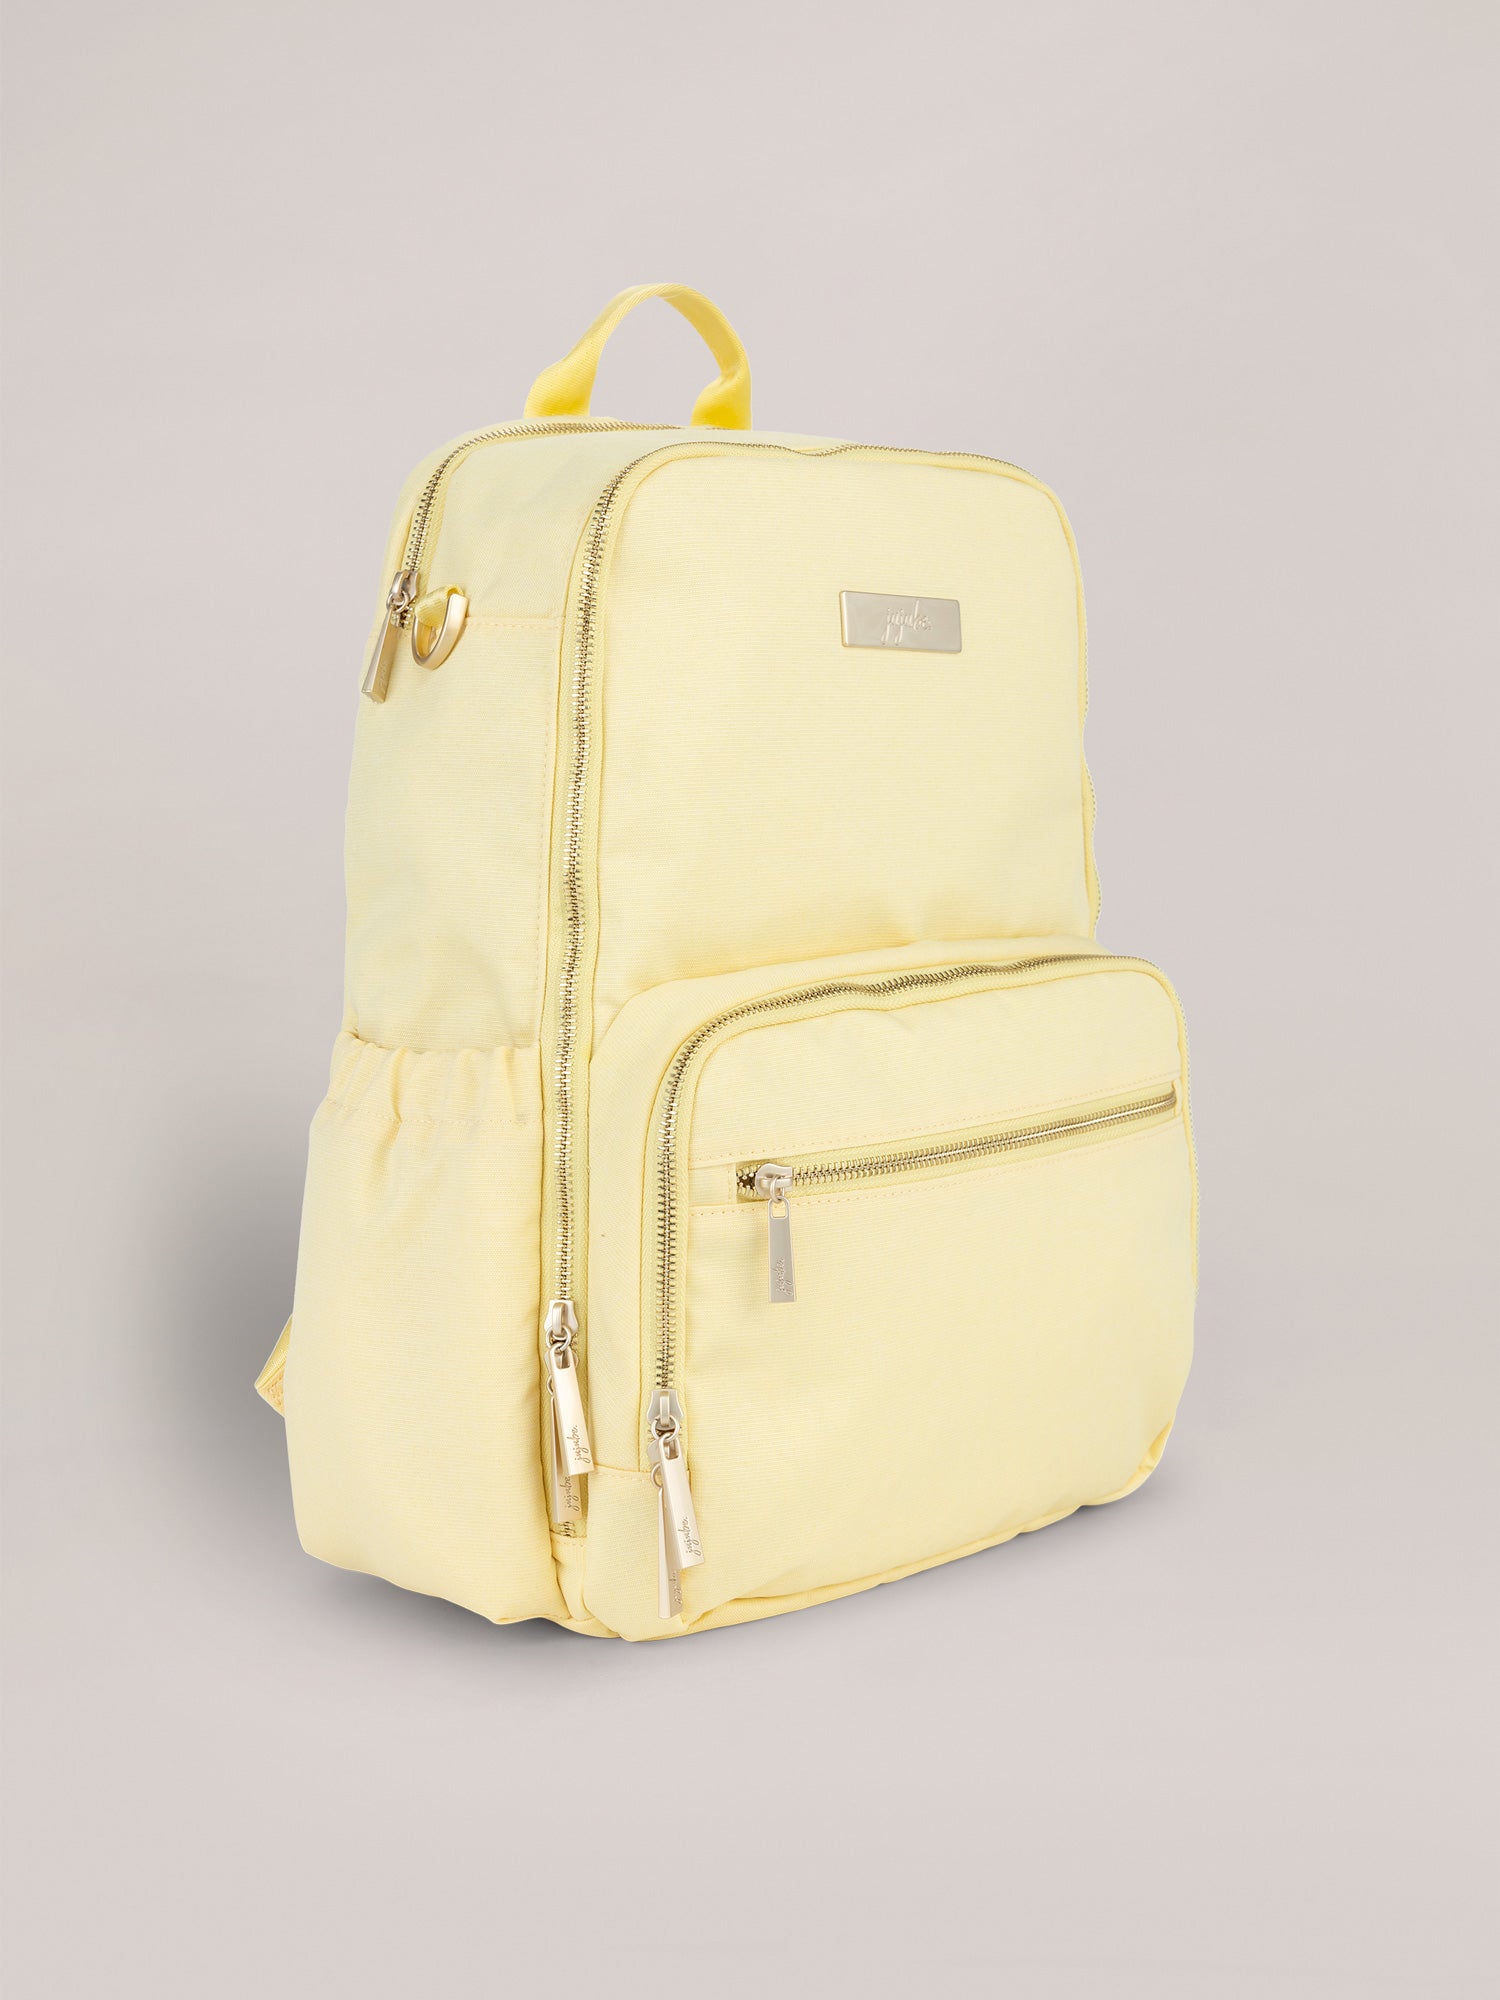 Light Yellow Zealous Backpack Diaper Bag Quarter Angle View